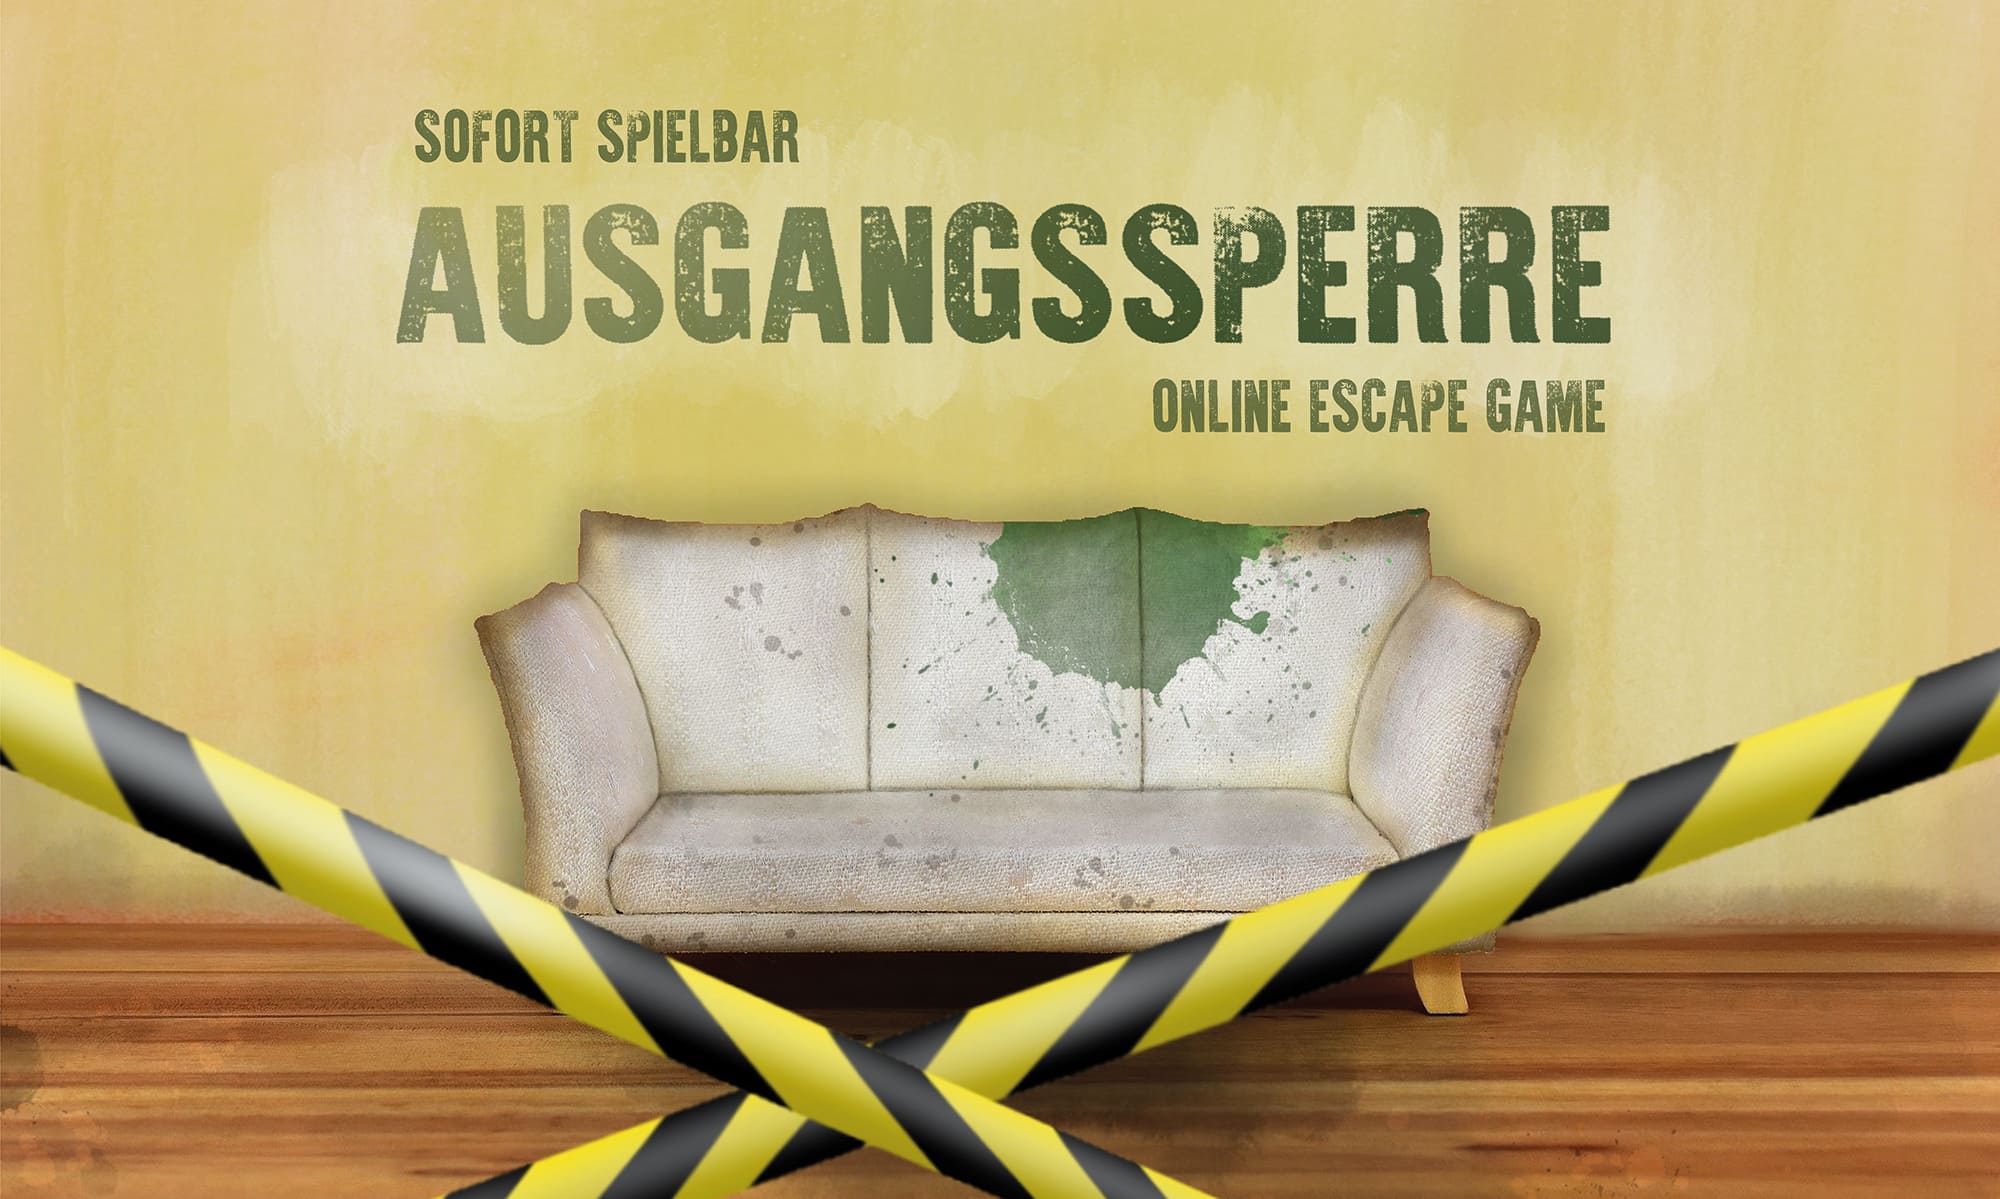 escape game online ausgangsperre